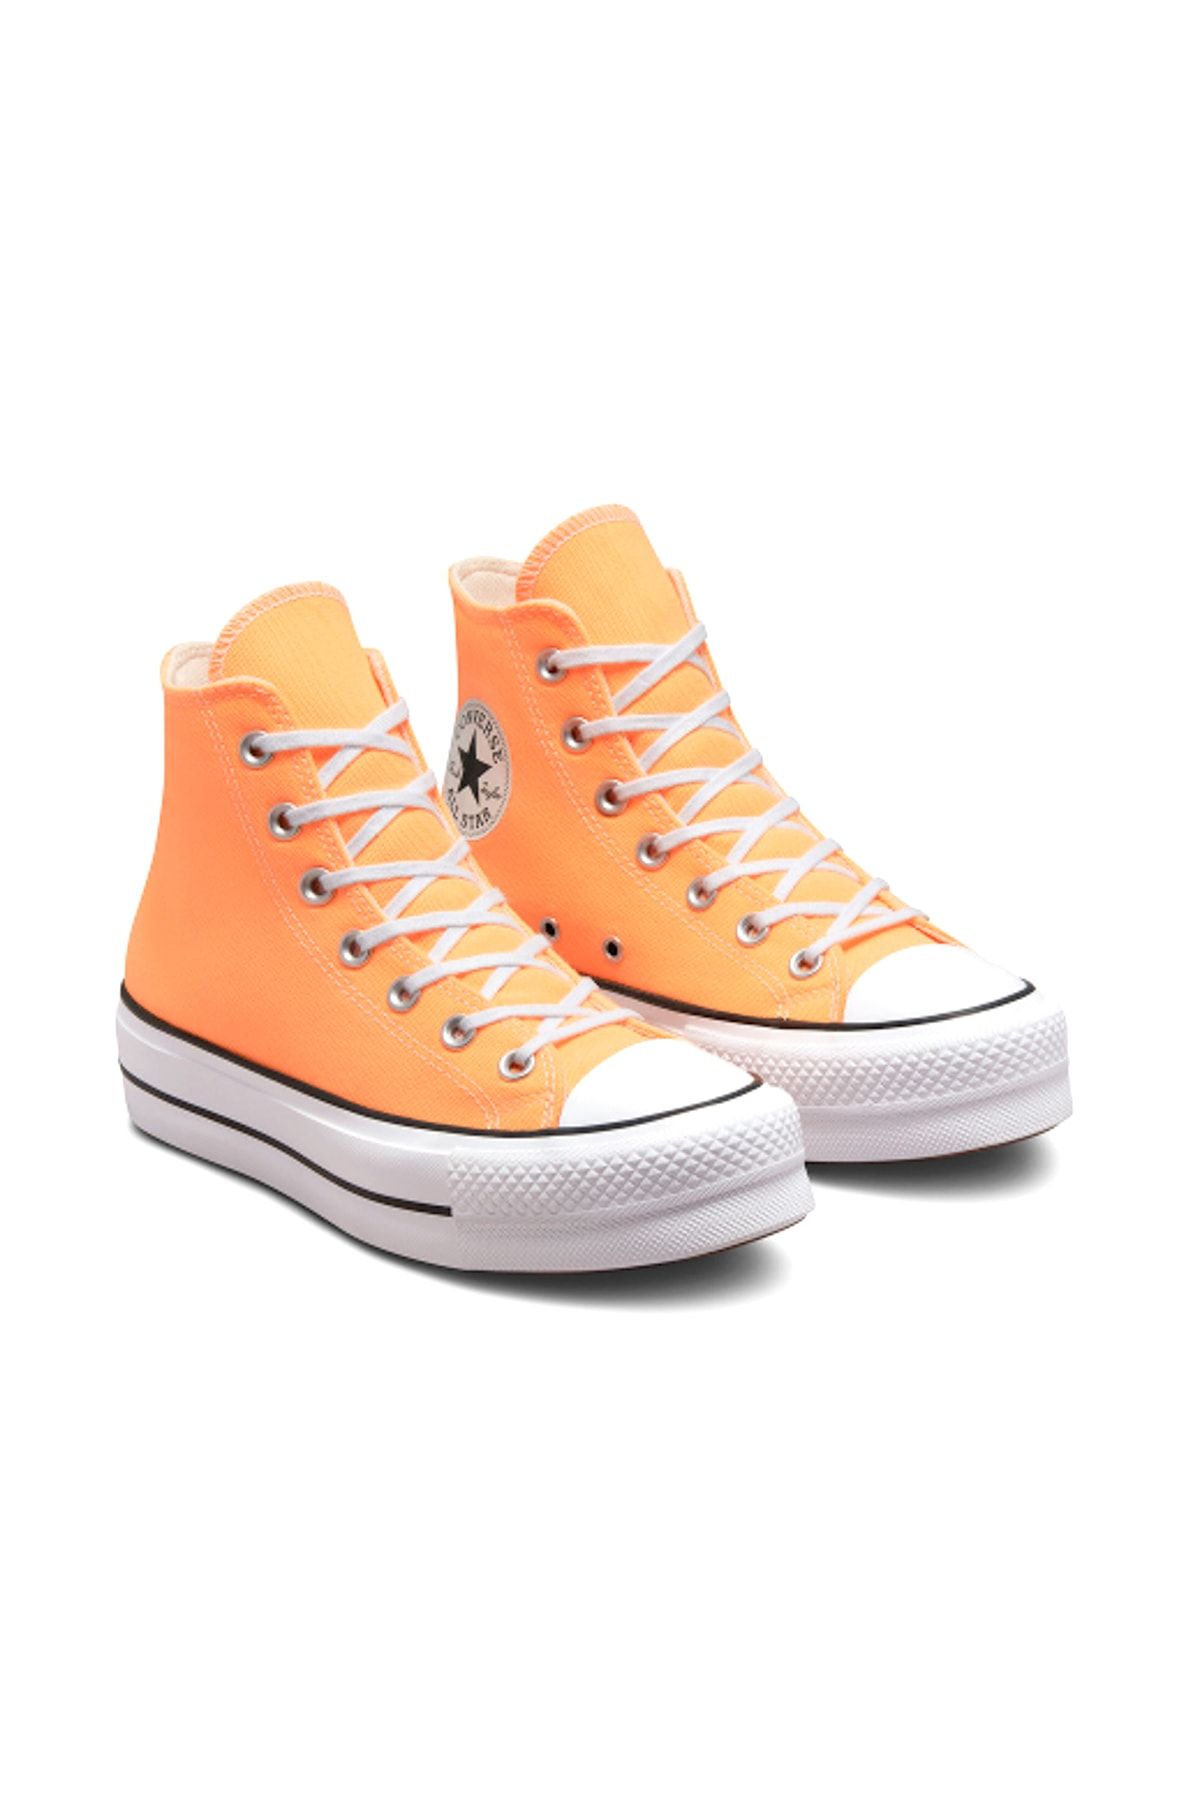 Converse Kadın / Kız Peach Beam/Black/White Sneaker